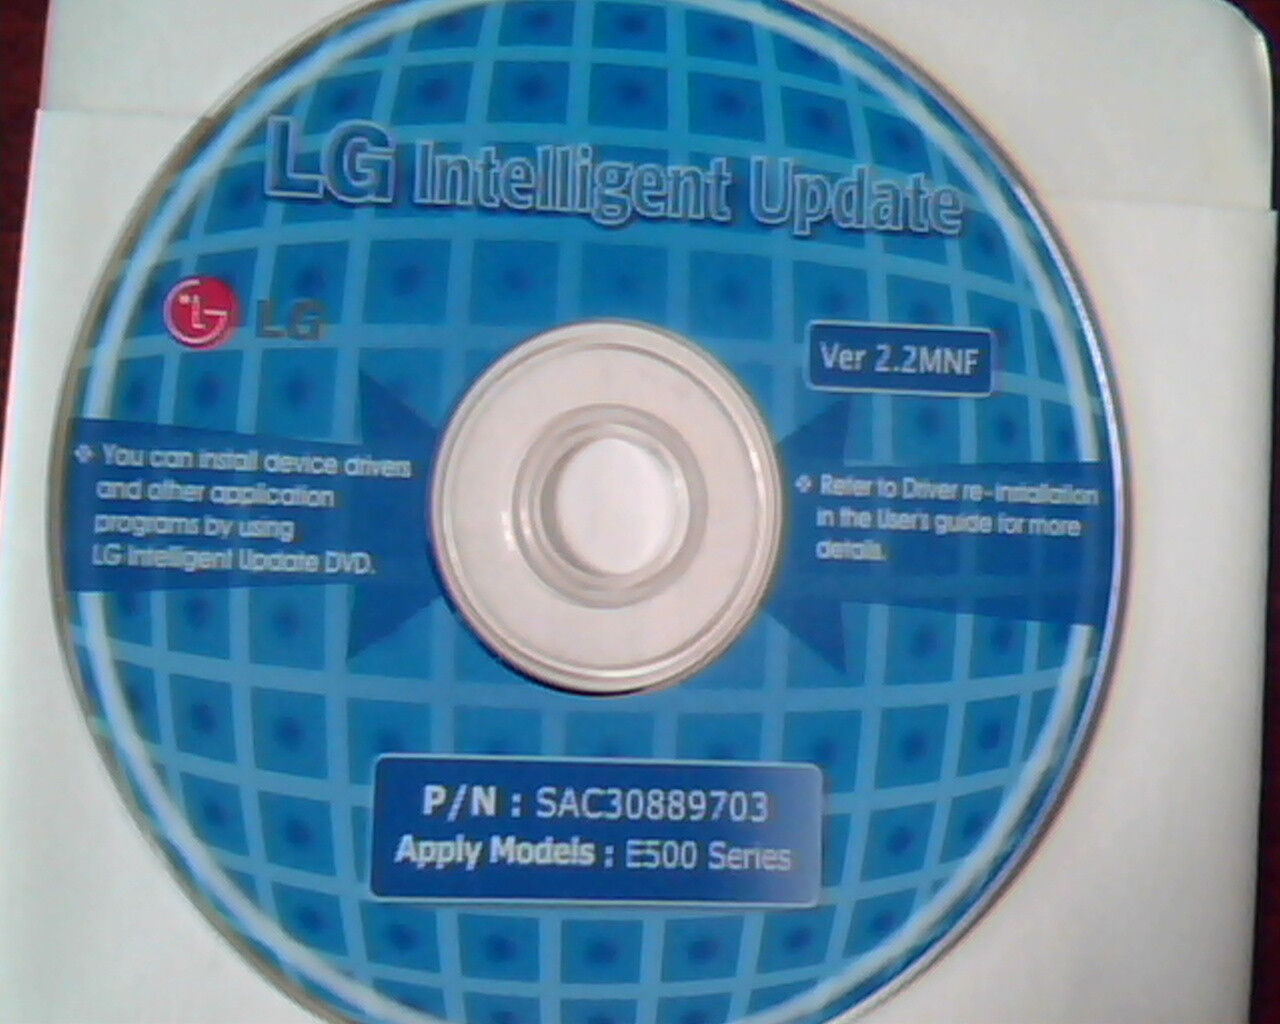 CD LG Intelligent Update Ver 2.2MNF E500 Series SAC3088973